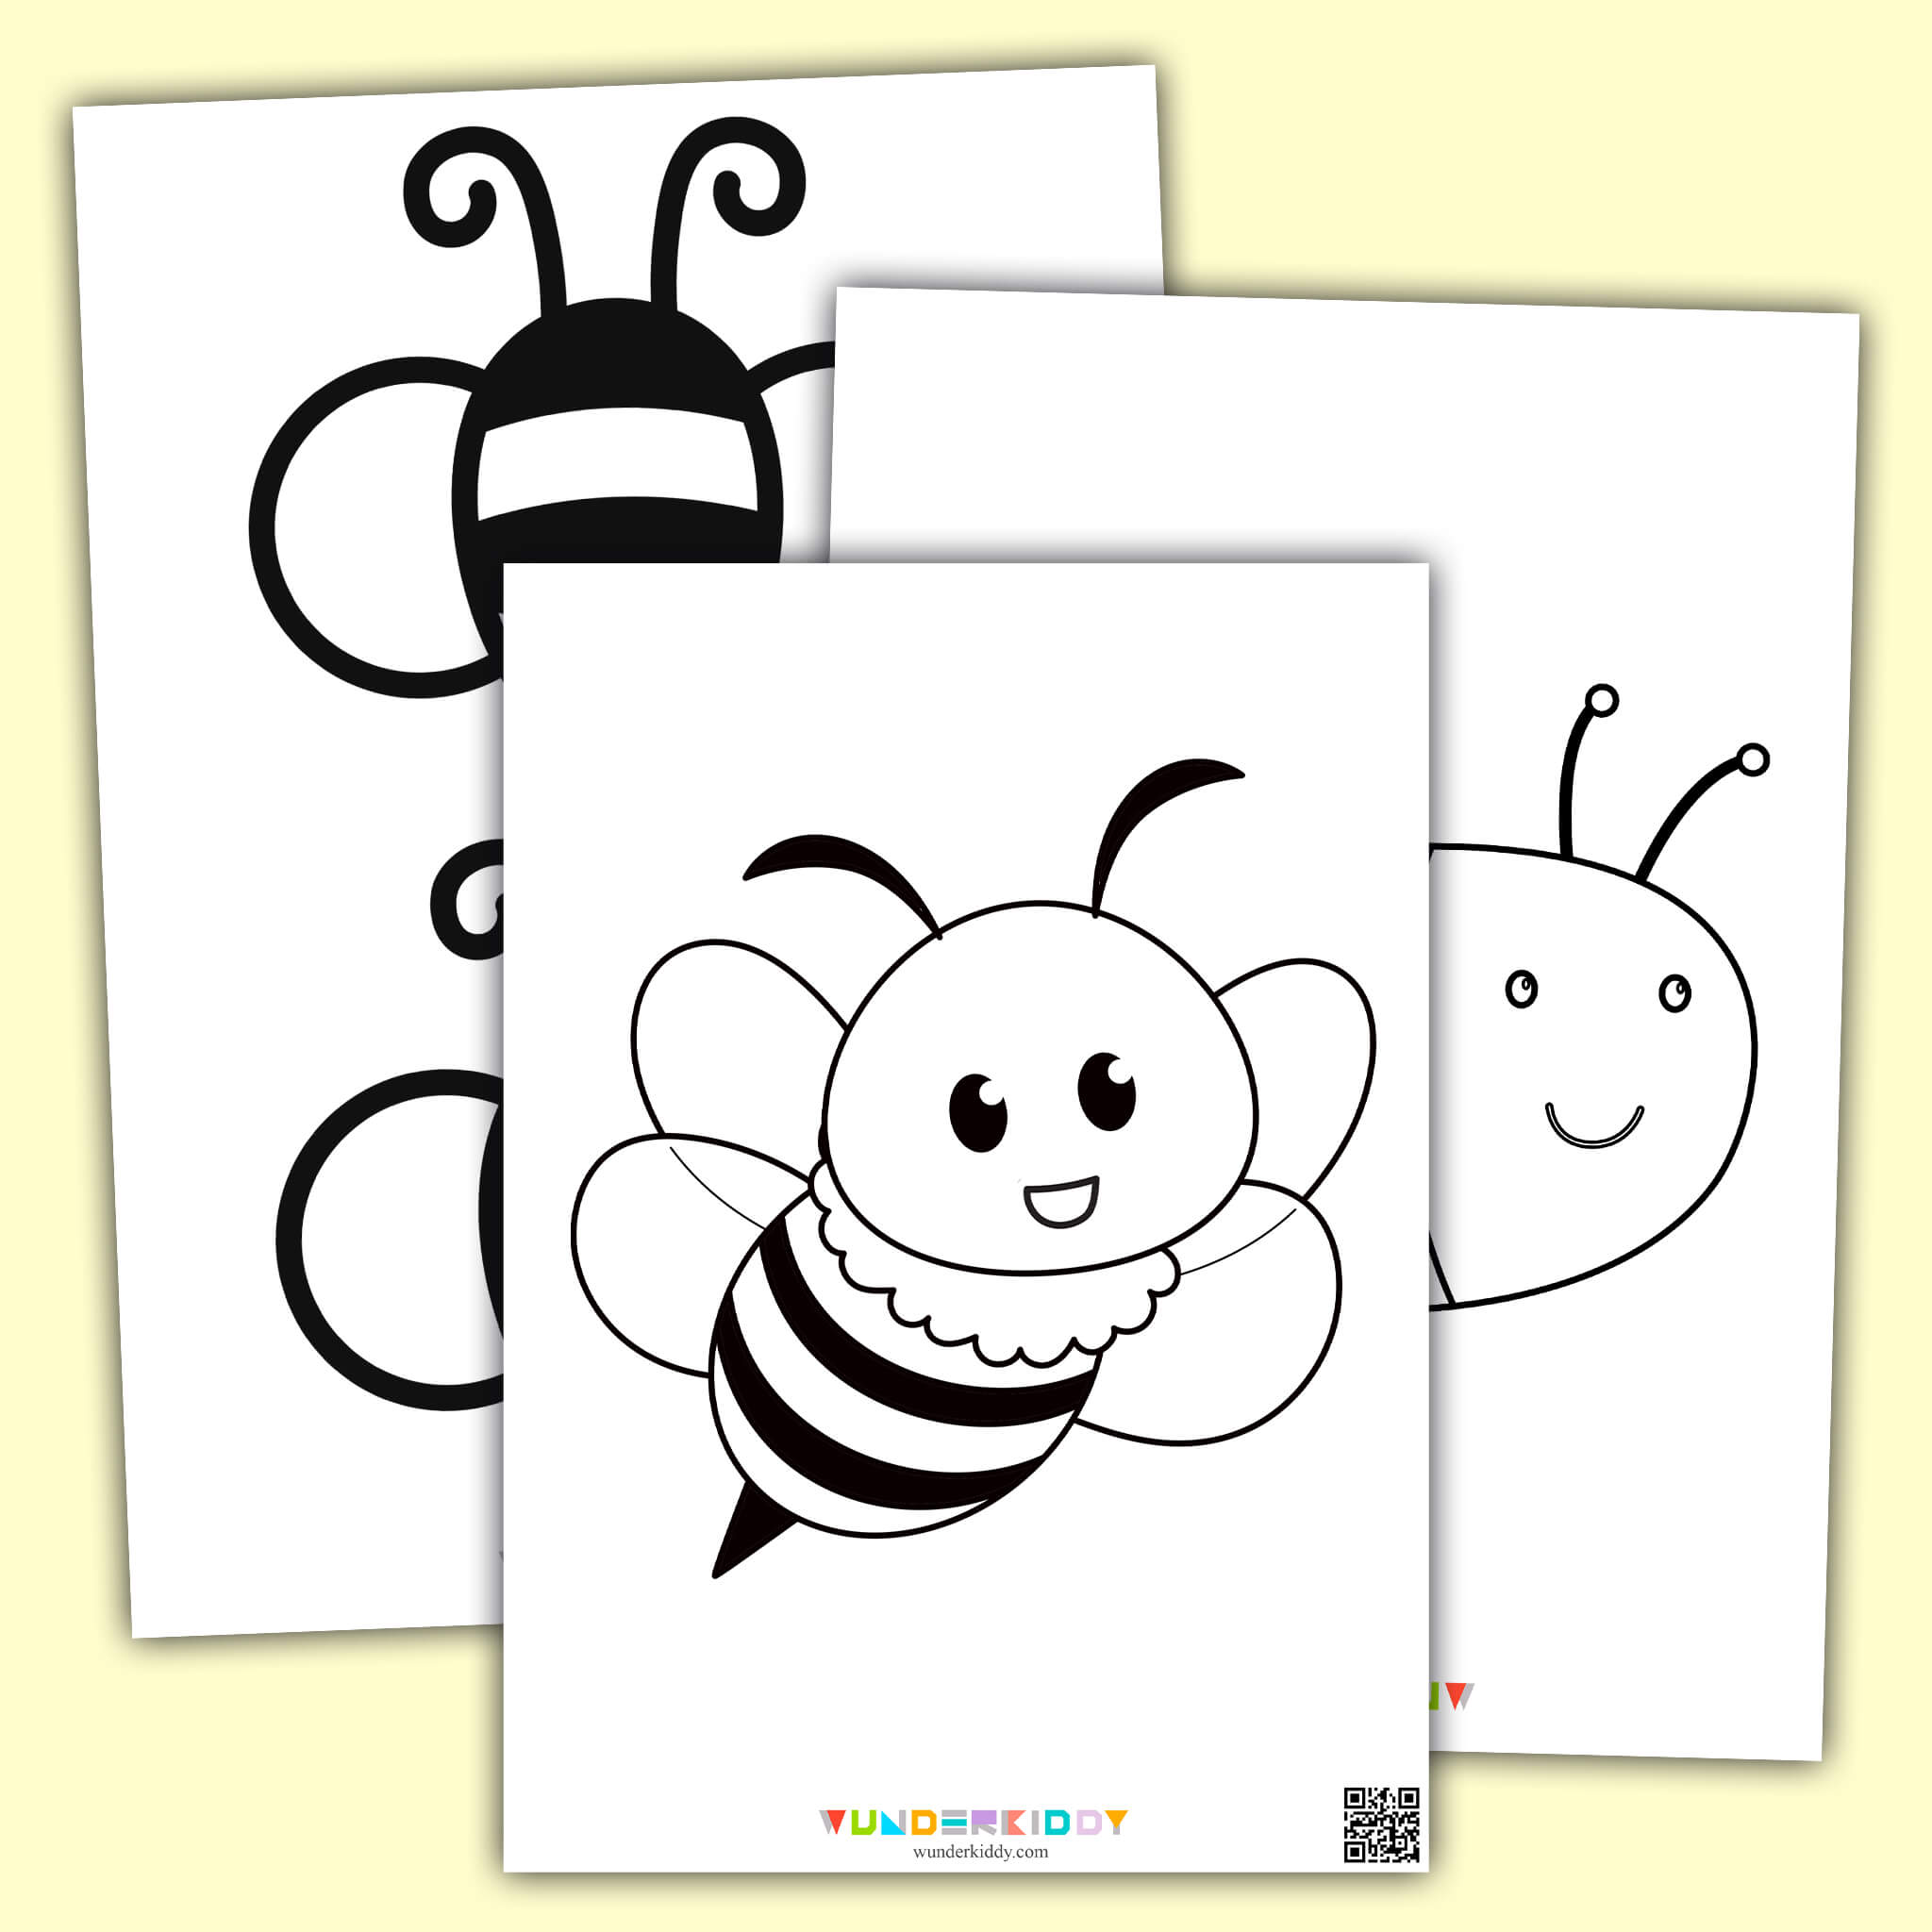 Bee Template Free Printable